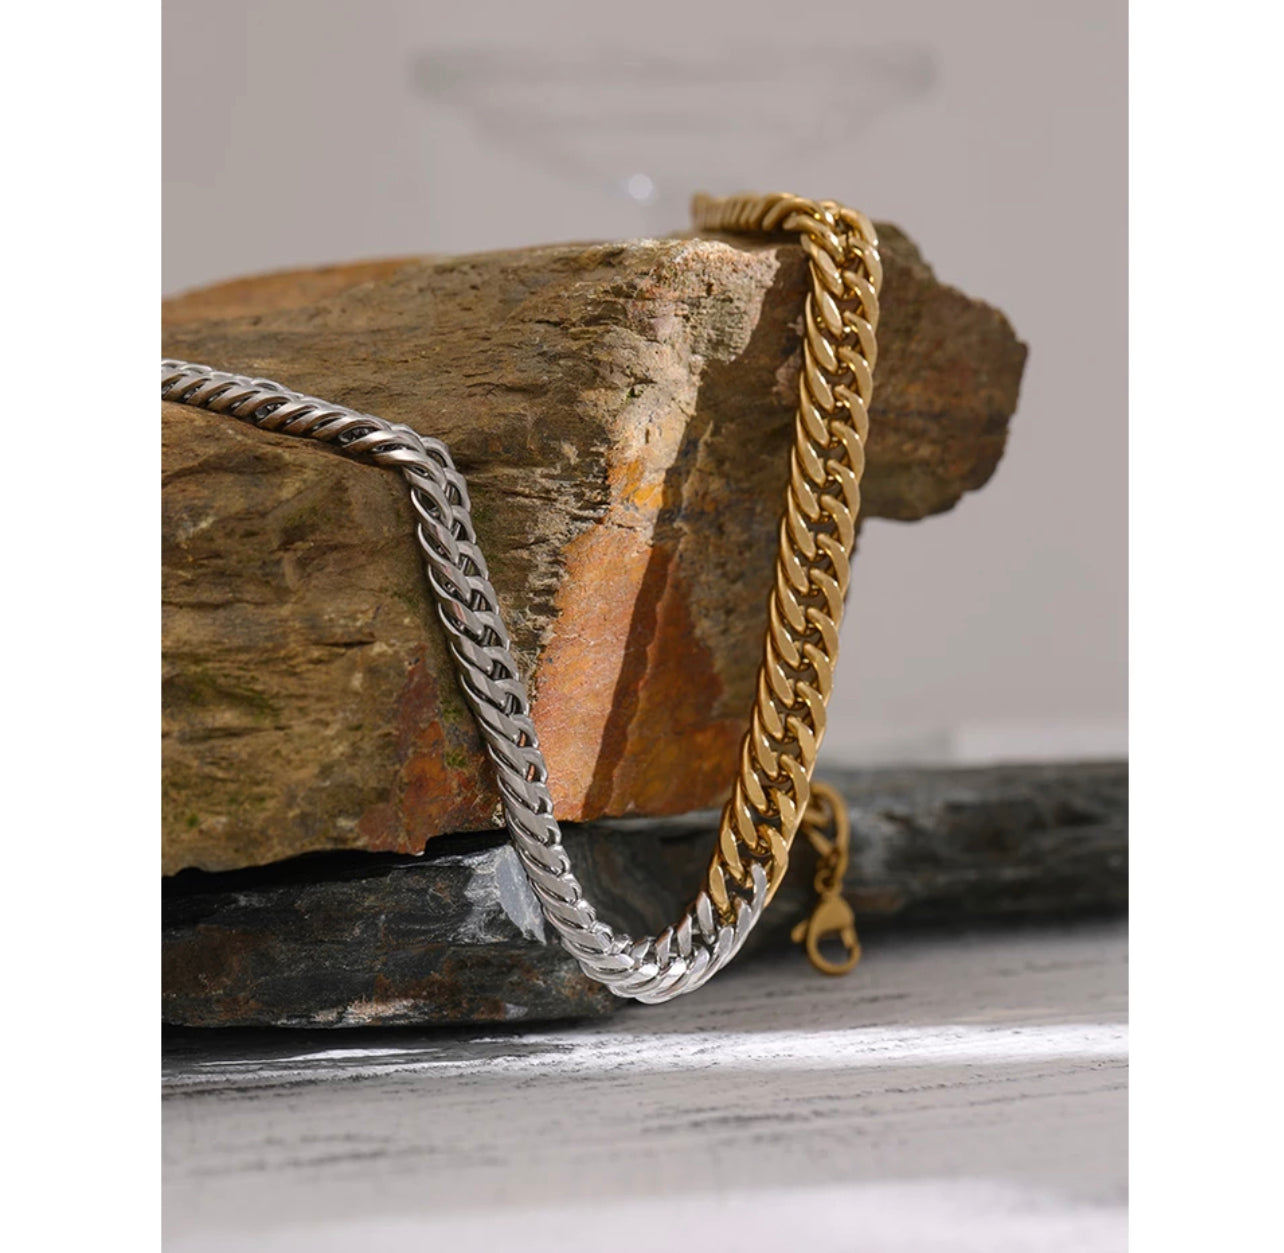 Erika Williner Designs - Himalaya Necklace and bracelet